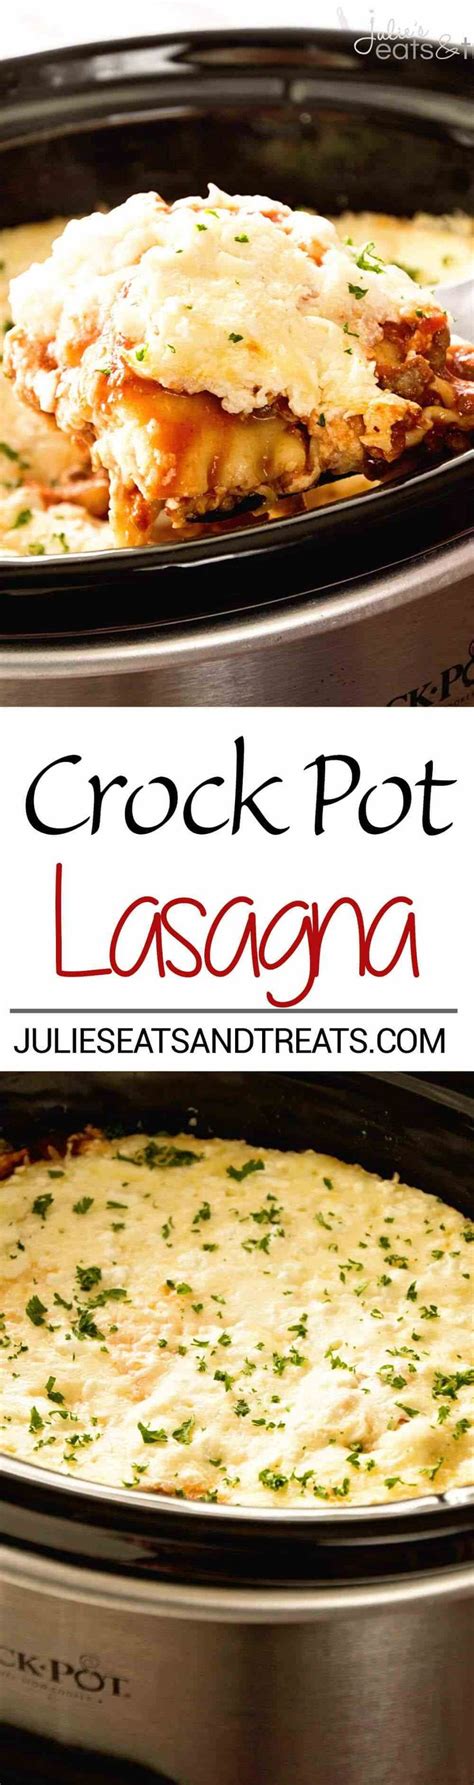 Crock Pot Lasagna Recipe ~ The Easiest Lasagna Recipe Youll Ever Make